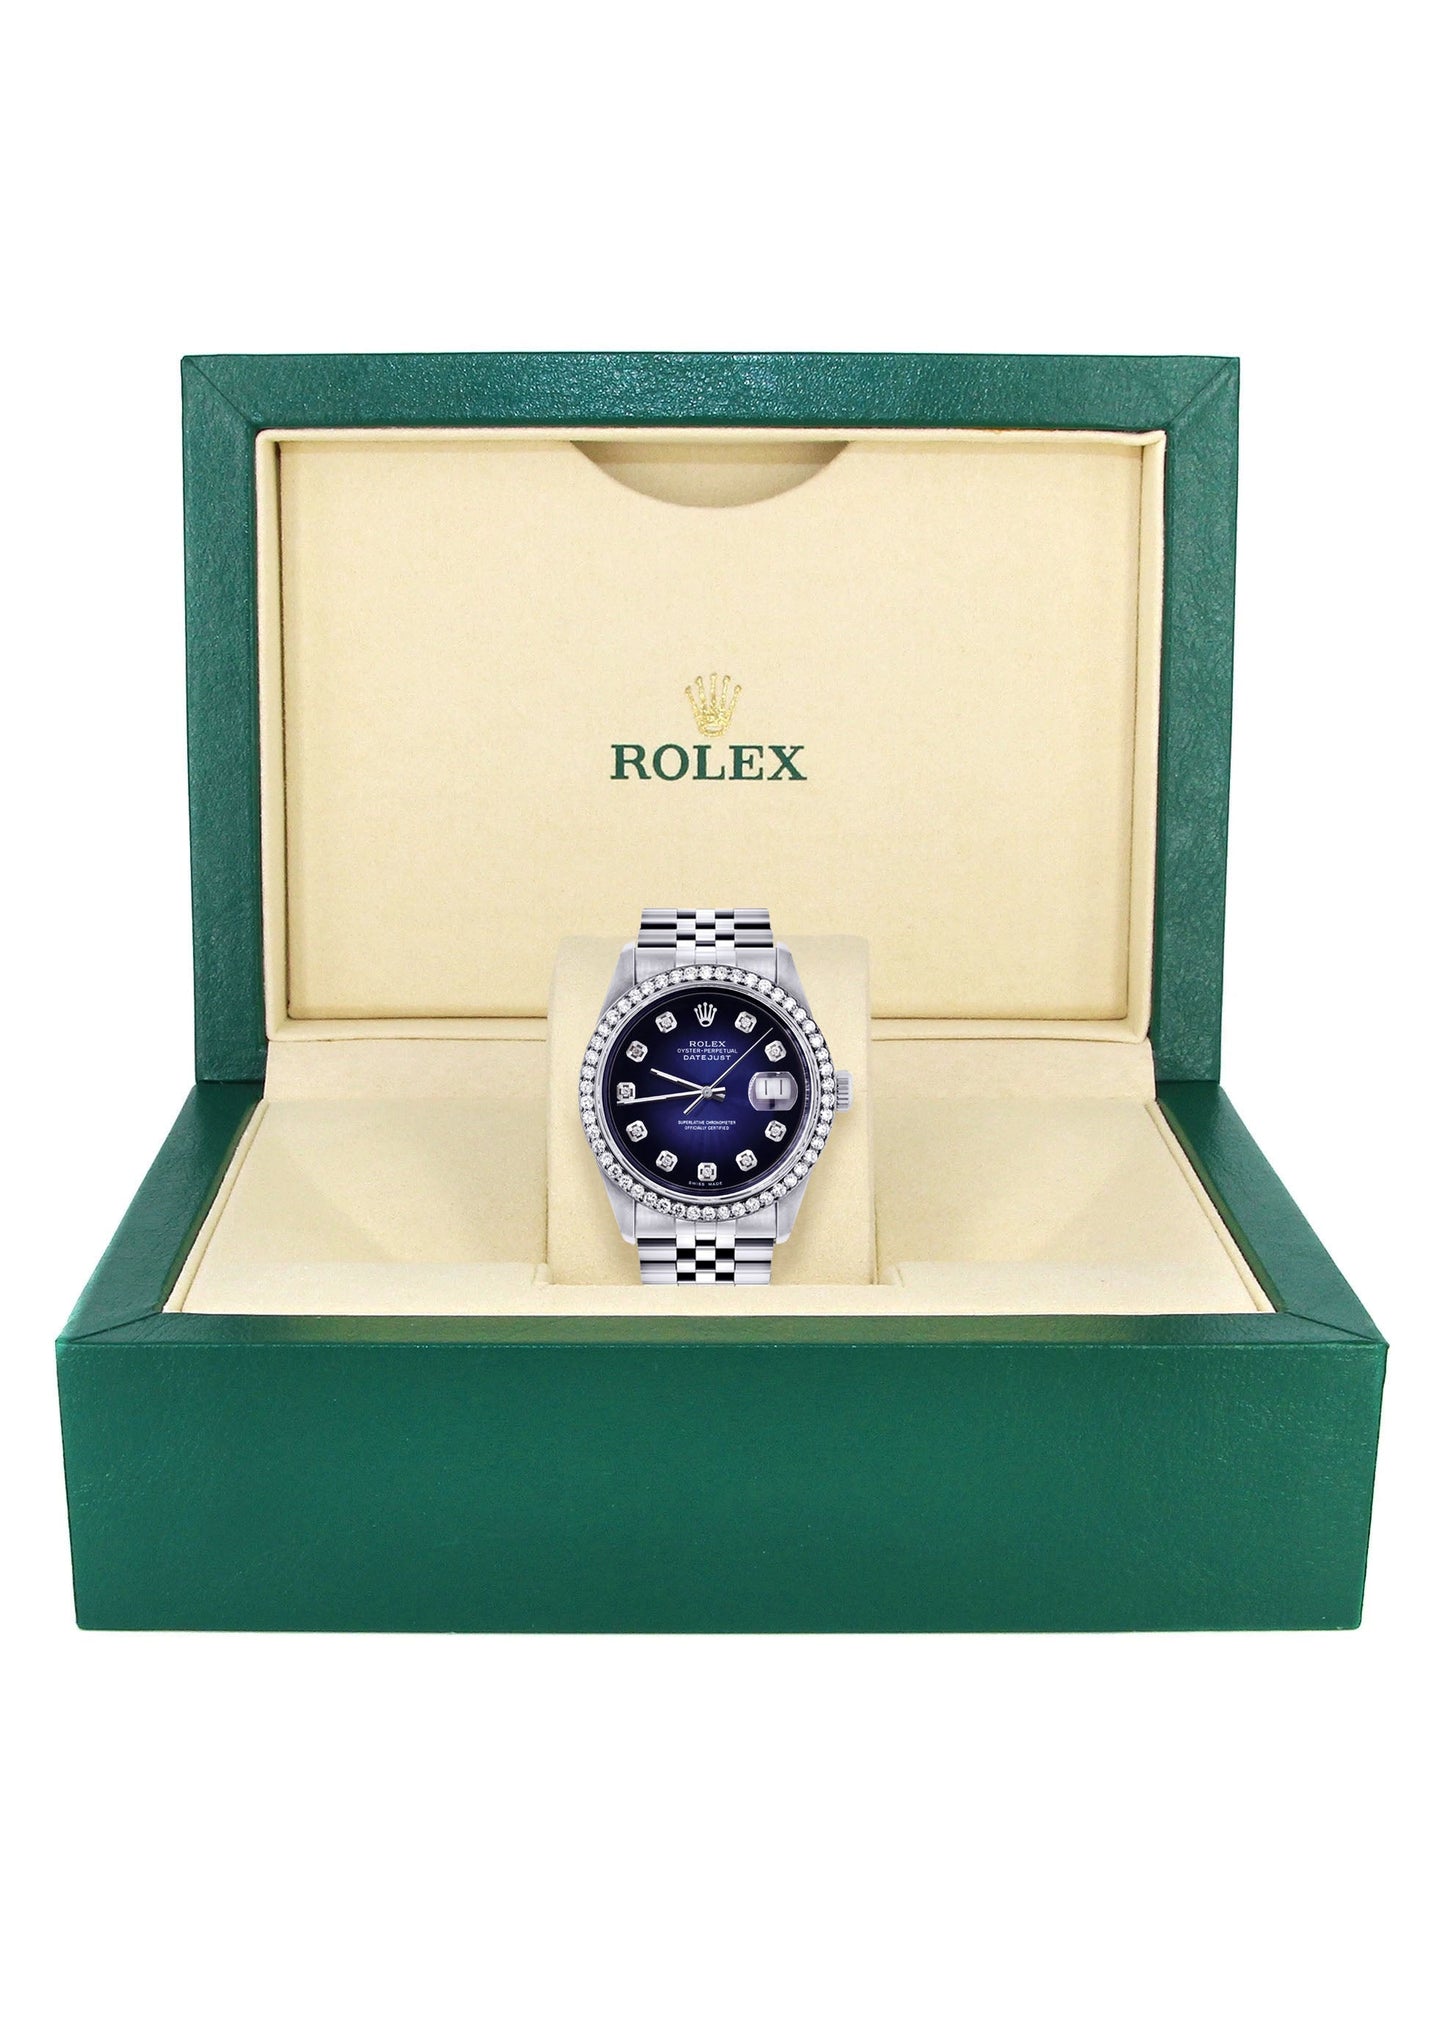 Mens Rolex Datejust Watch 16200 | 36Mm | Blue Black Dial | Jubilee Band